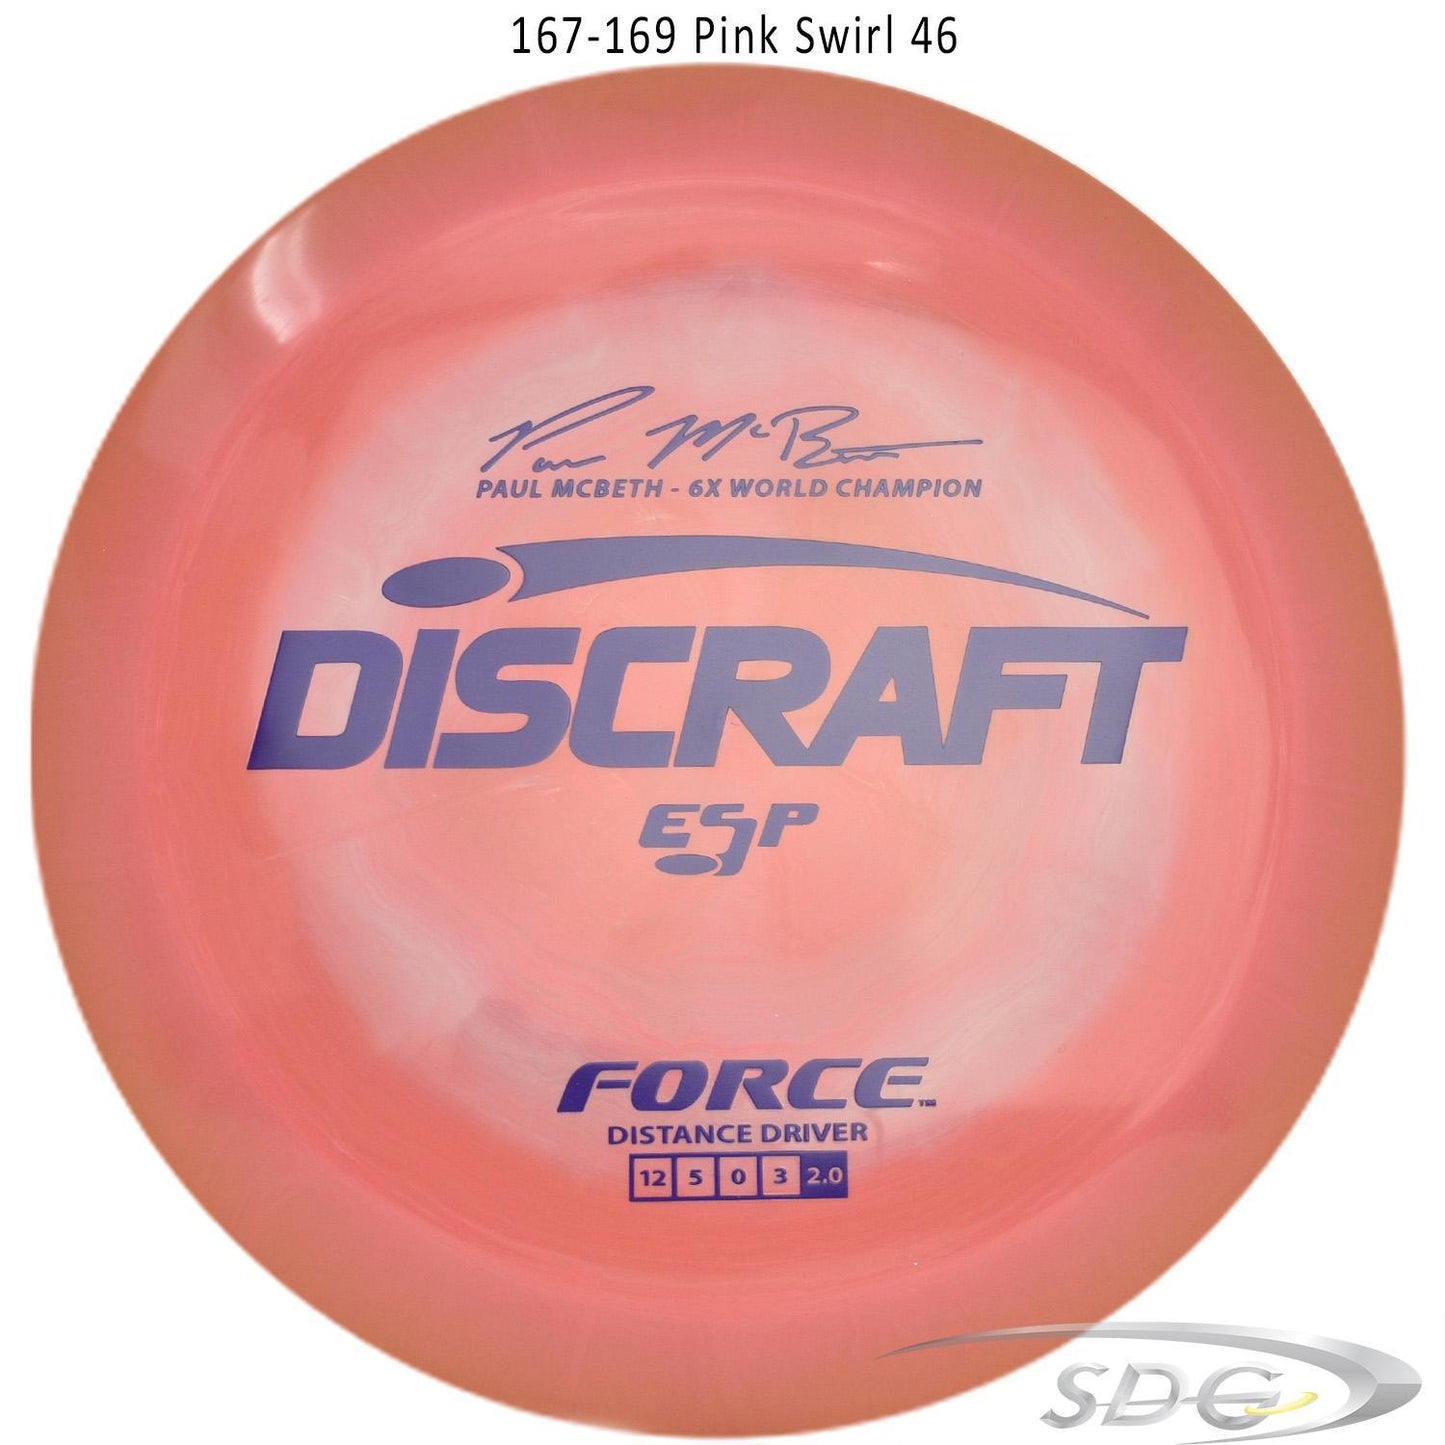 discraft-esp-force-6x-paul-mcbeth-signature-disc-golf-distance-driver-169-160-weights 167-169 Pink Swirl 46 